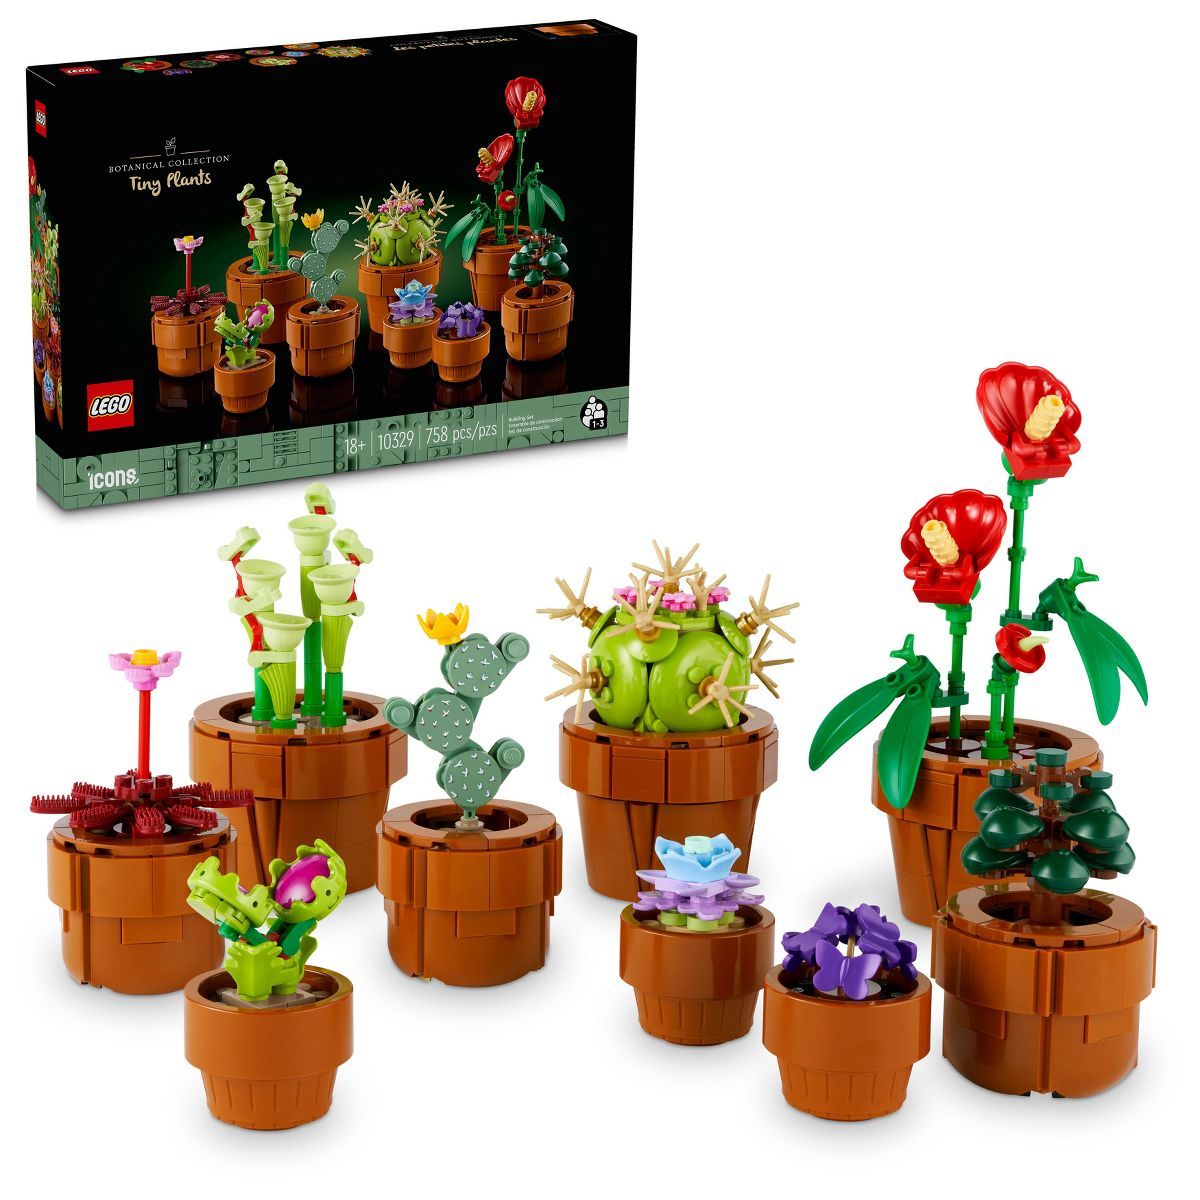 LEGO Icons Tiny Plants Build and Display Set  10329 | Target